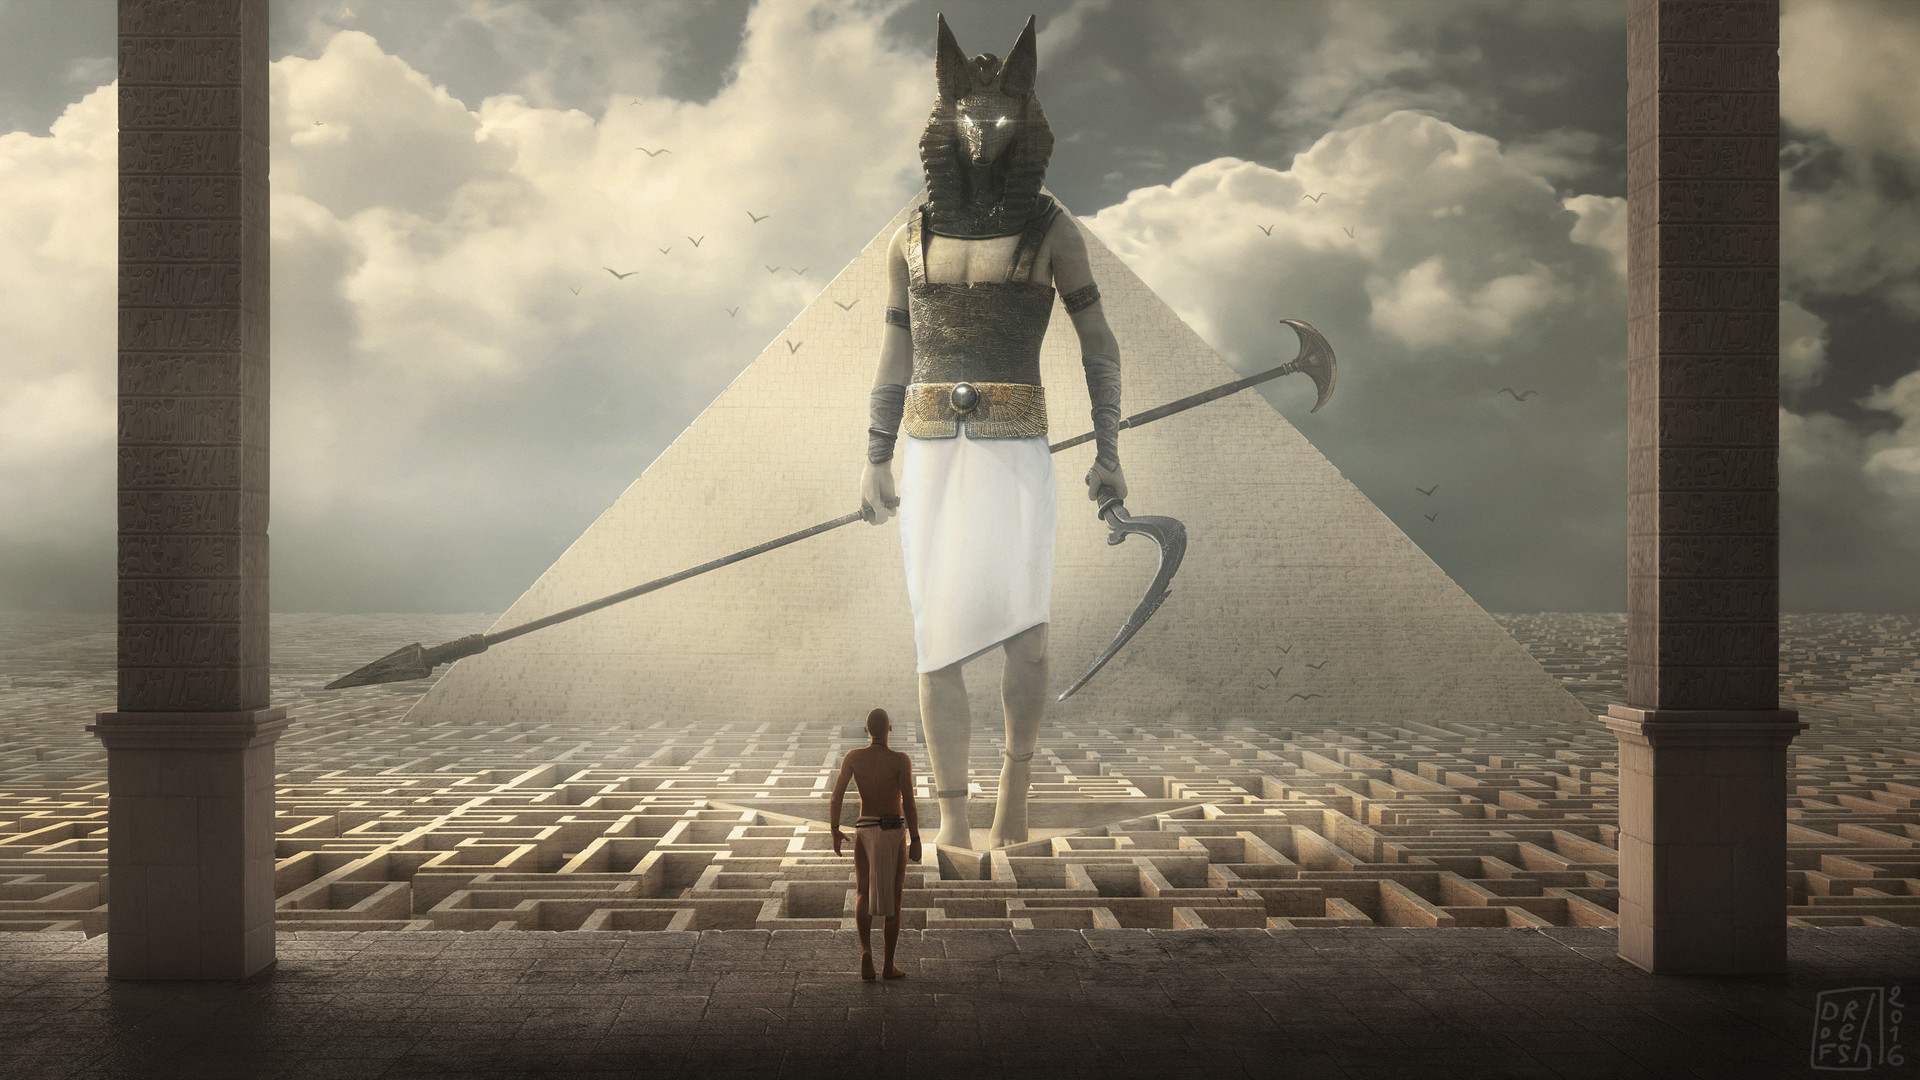 warrior, DOFRESH, Egypt, Illustration, Anubis, Pyramid, Fantasy art